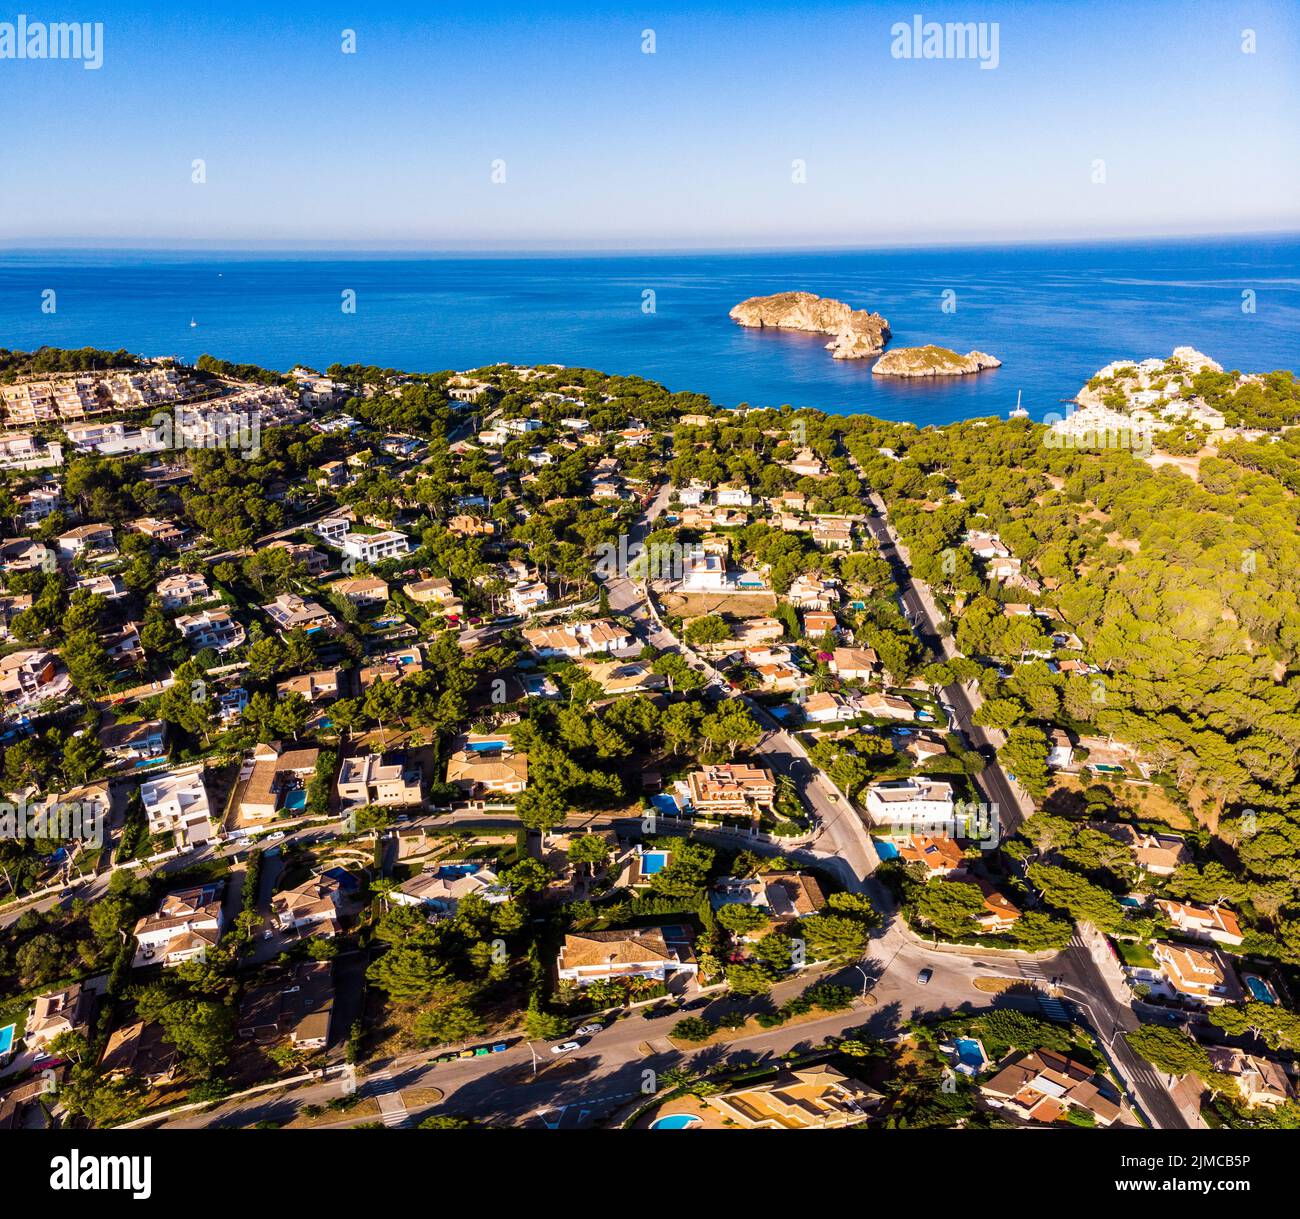 Aerial view of Santa Ponsa and the marina of Santa Ponsa, Mallorca, Balearic Islands, Spain Stock Photo